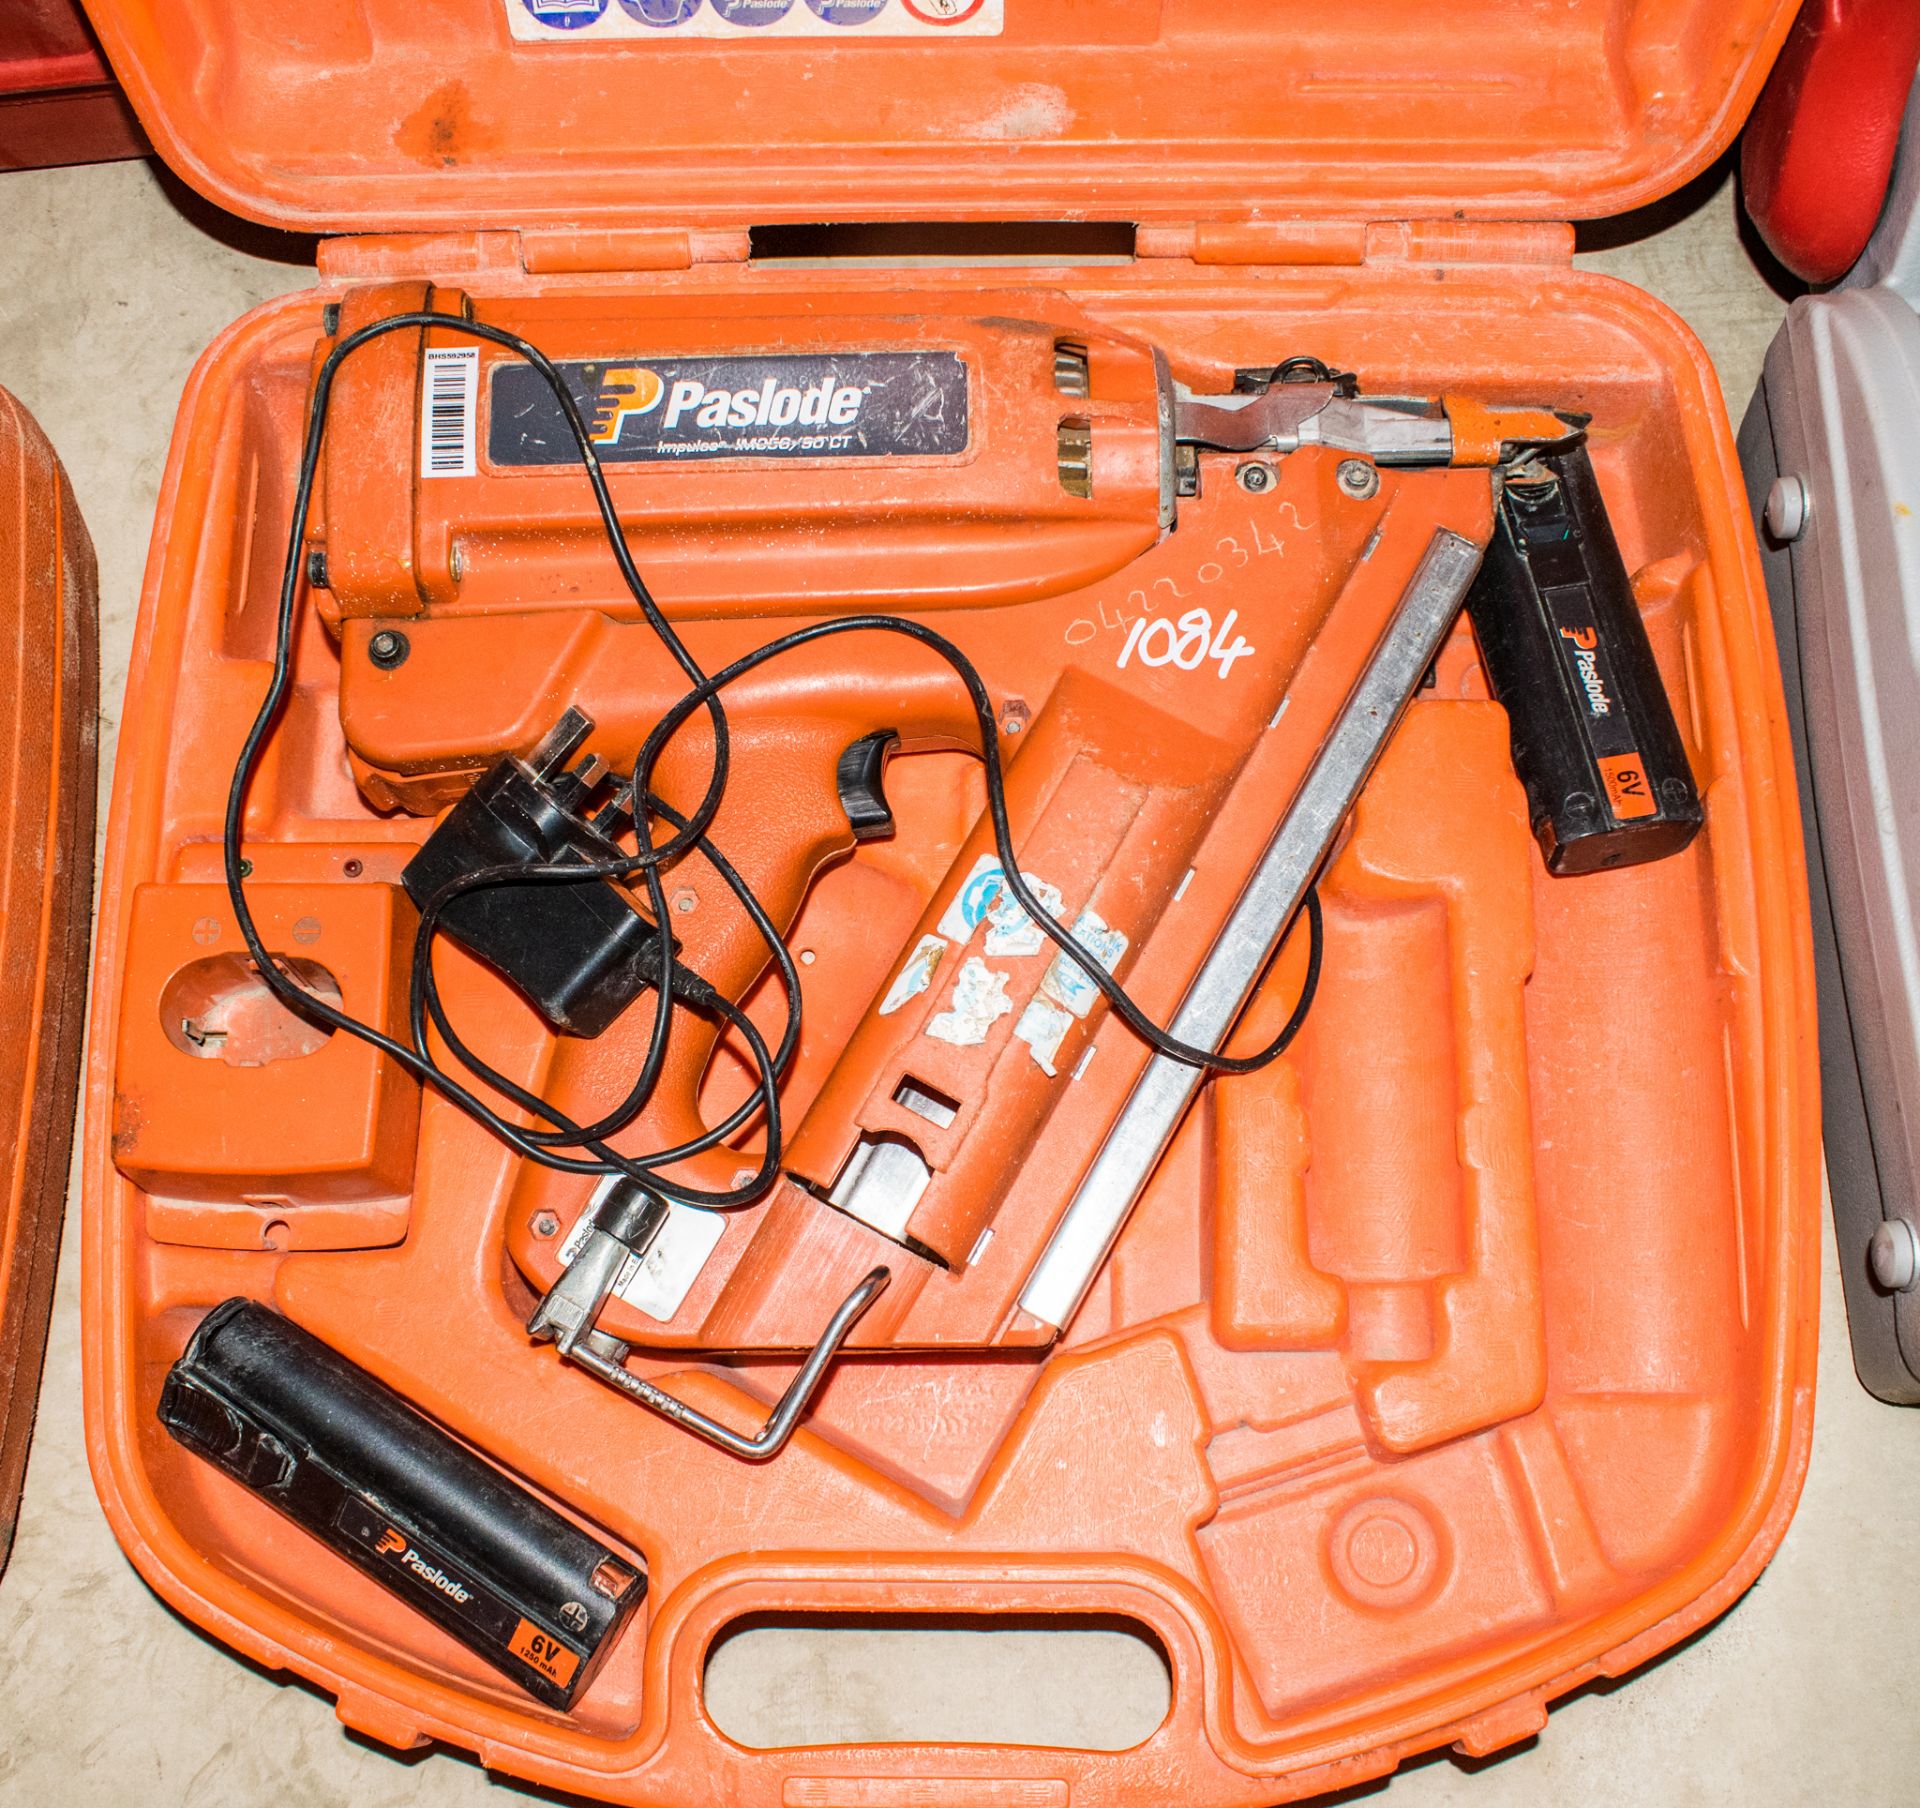 Paslode Impulse nail gun c/w 2 batteries, charger & carry case